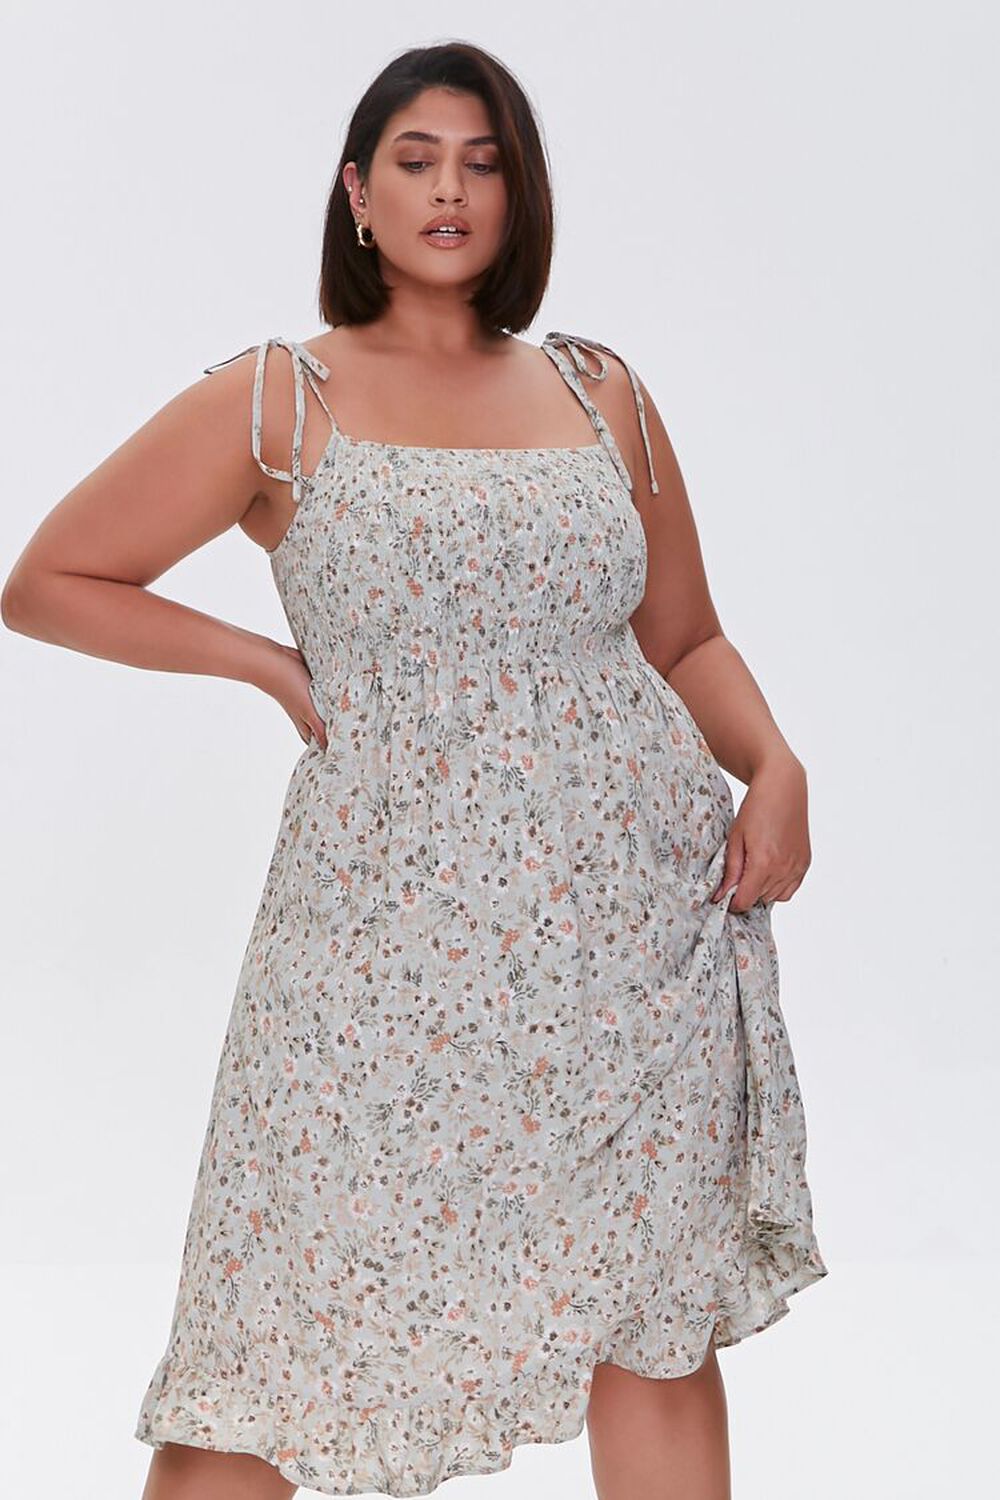 SAGE/MULTI Plus Size Floral Print Dress, image 1